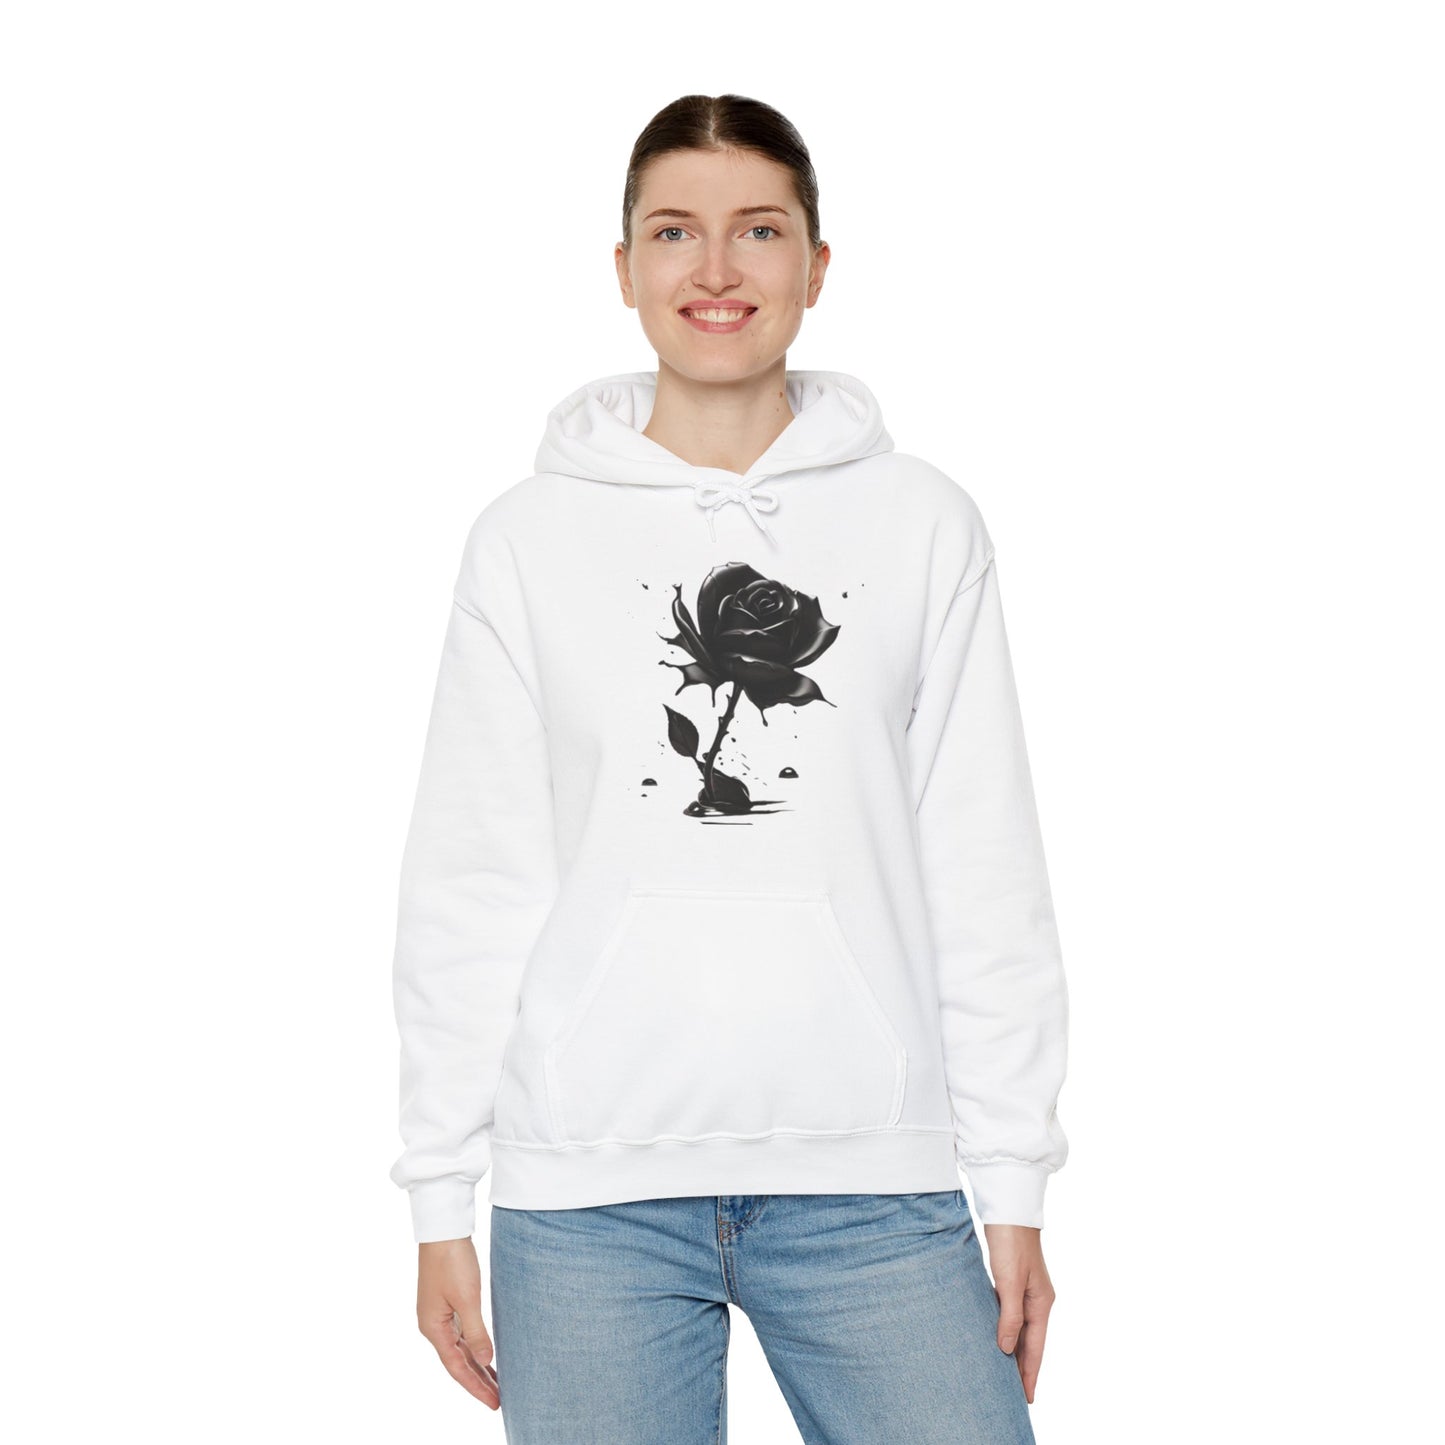 Black Rose - Unisex Hooded Sweatshirt